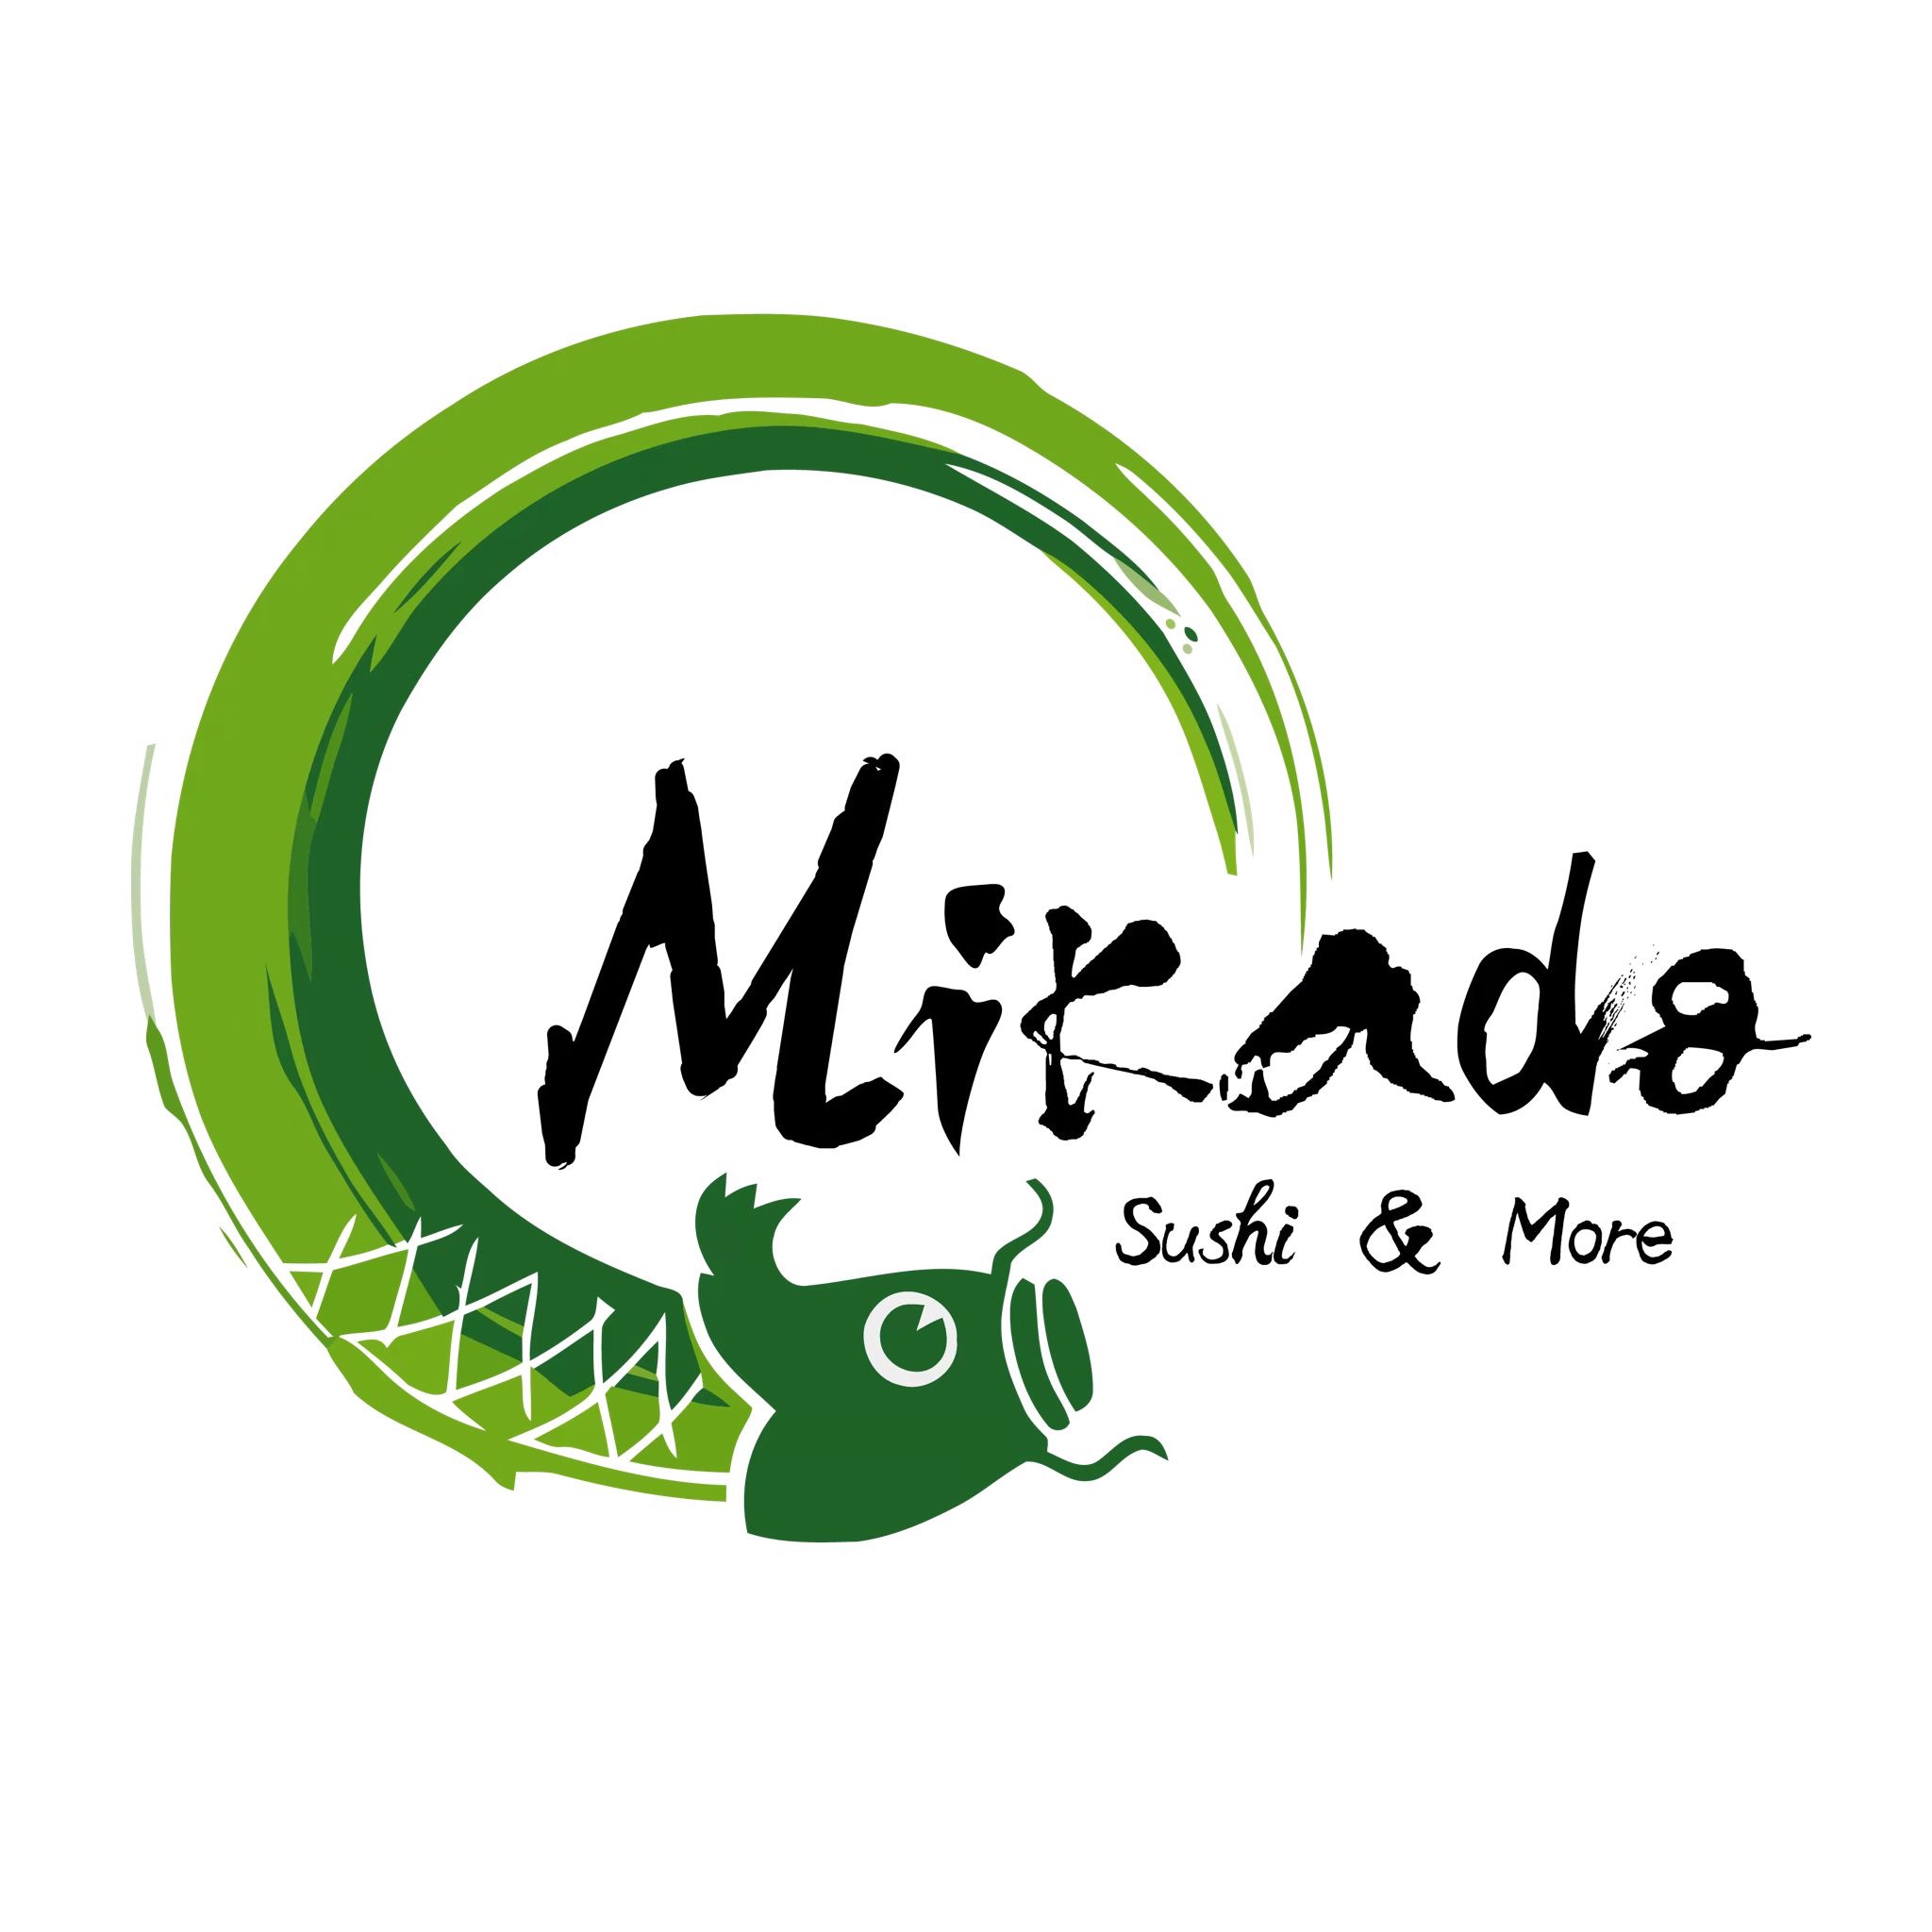 Mikado Sushi & More in Essen in Essen - Logo